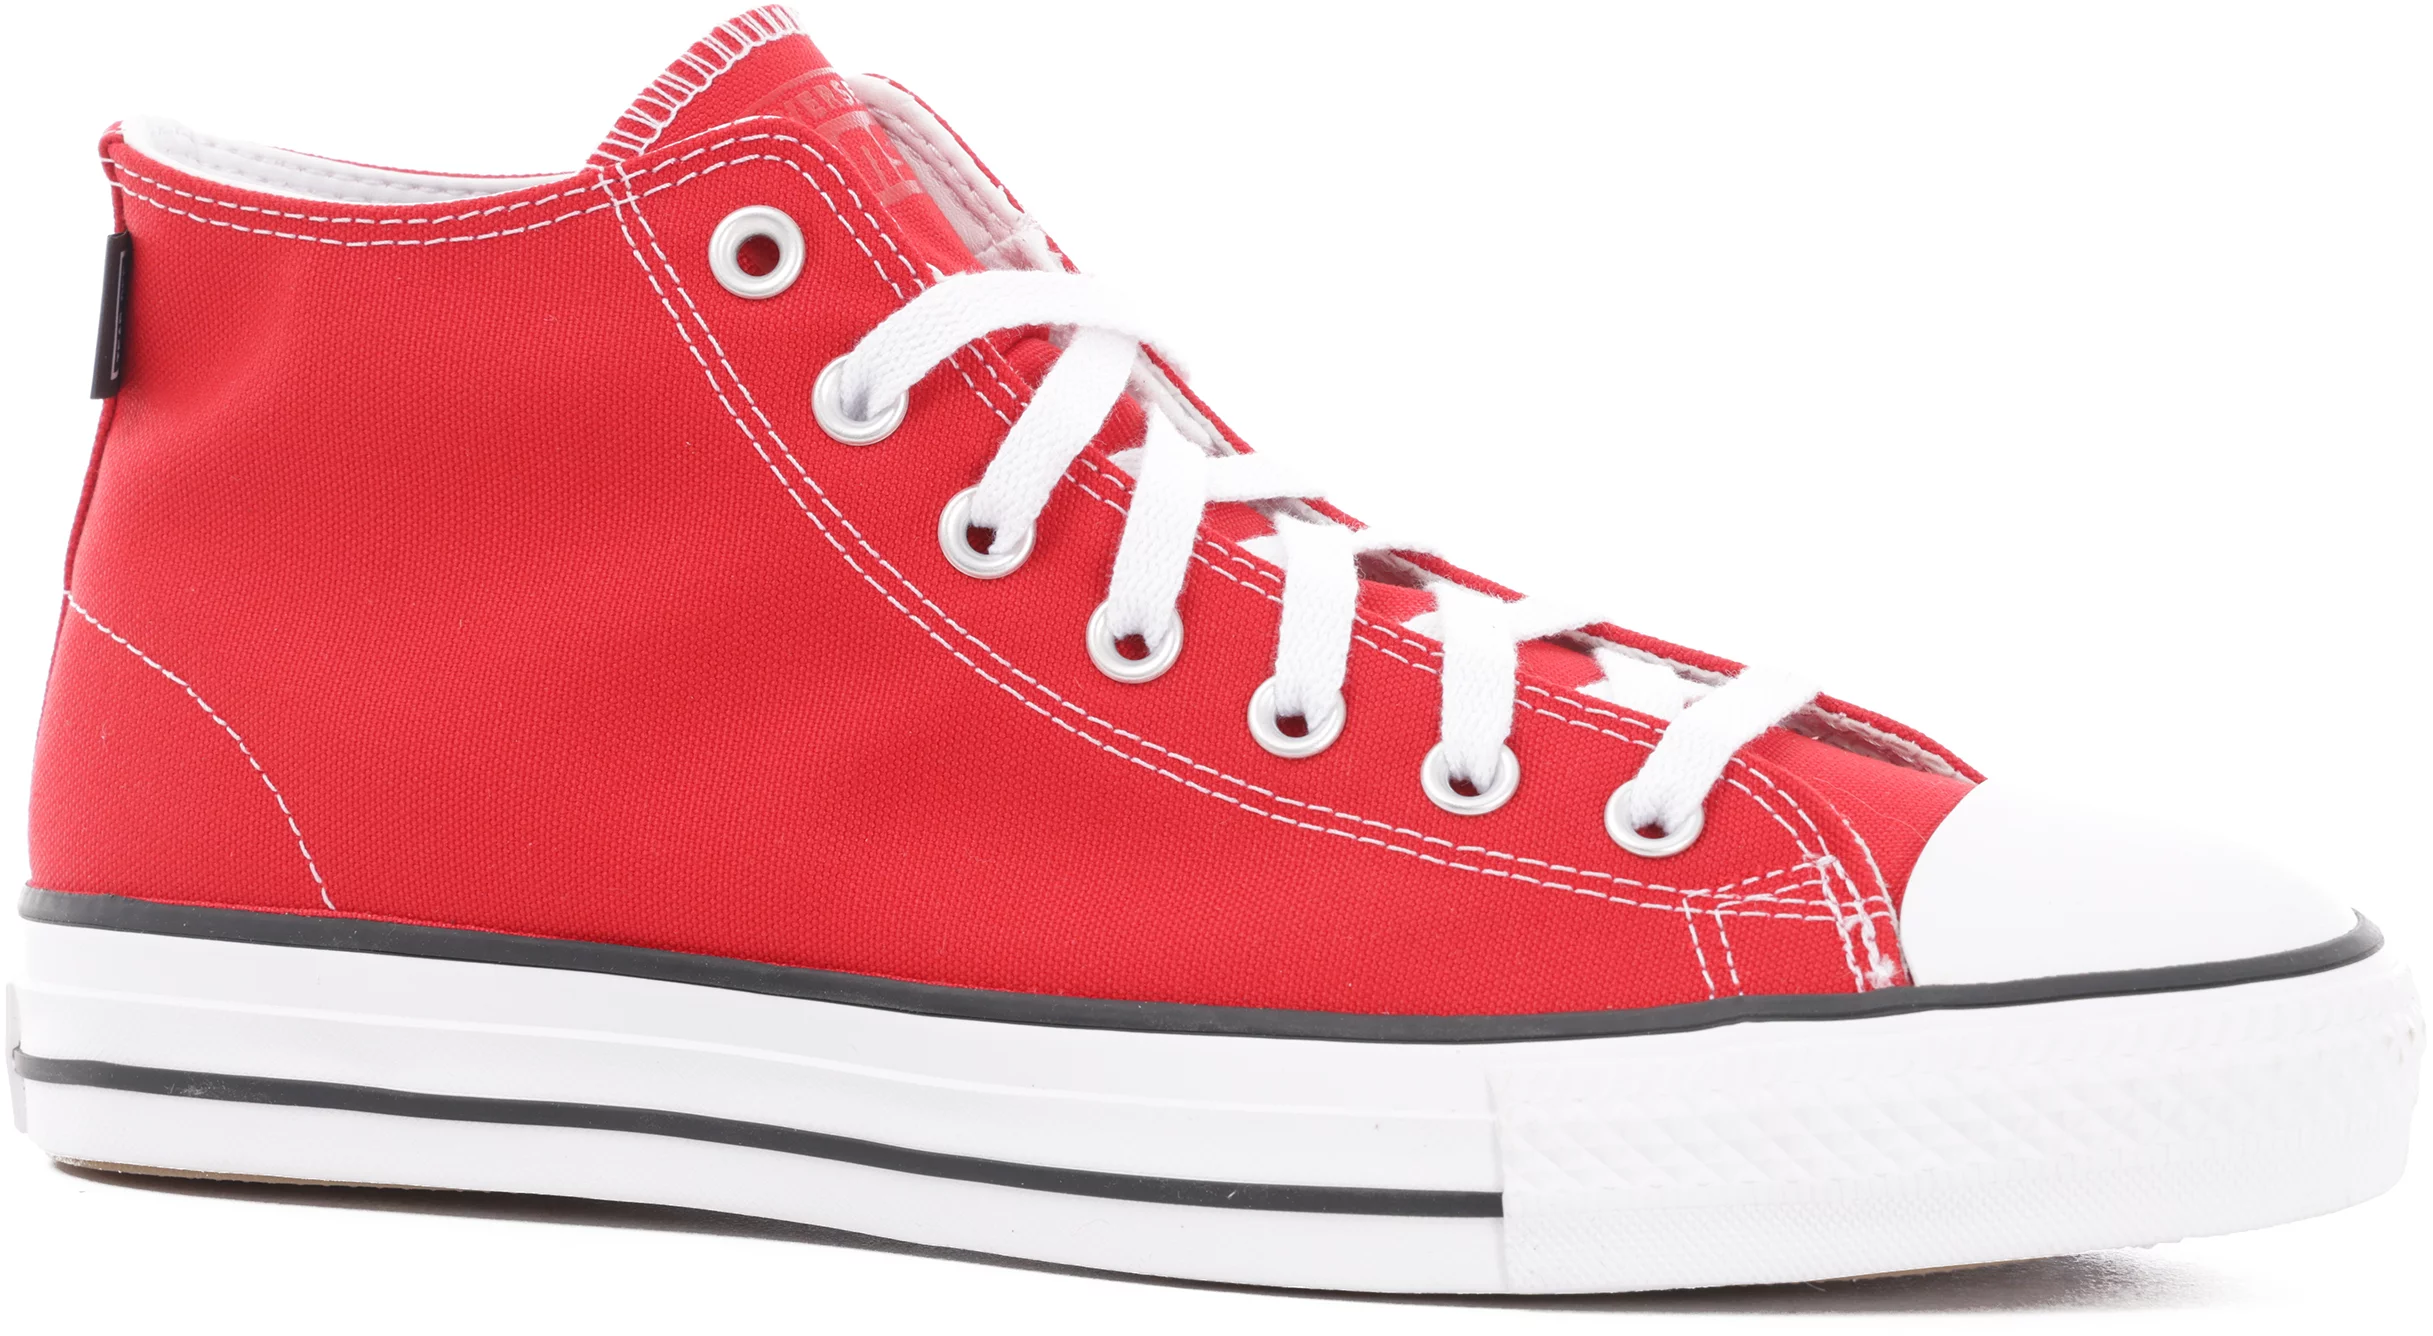 Converse Taylor Star Pro Skate Shoes - university red/white/black | Tactics